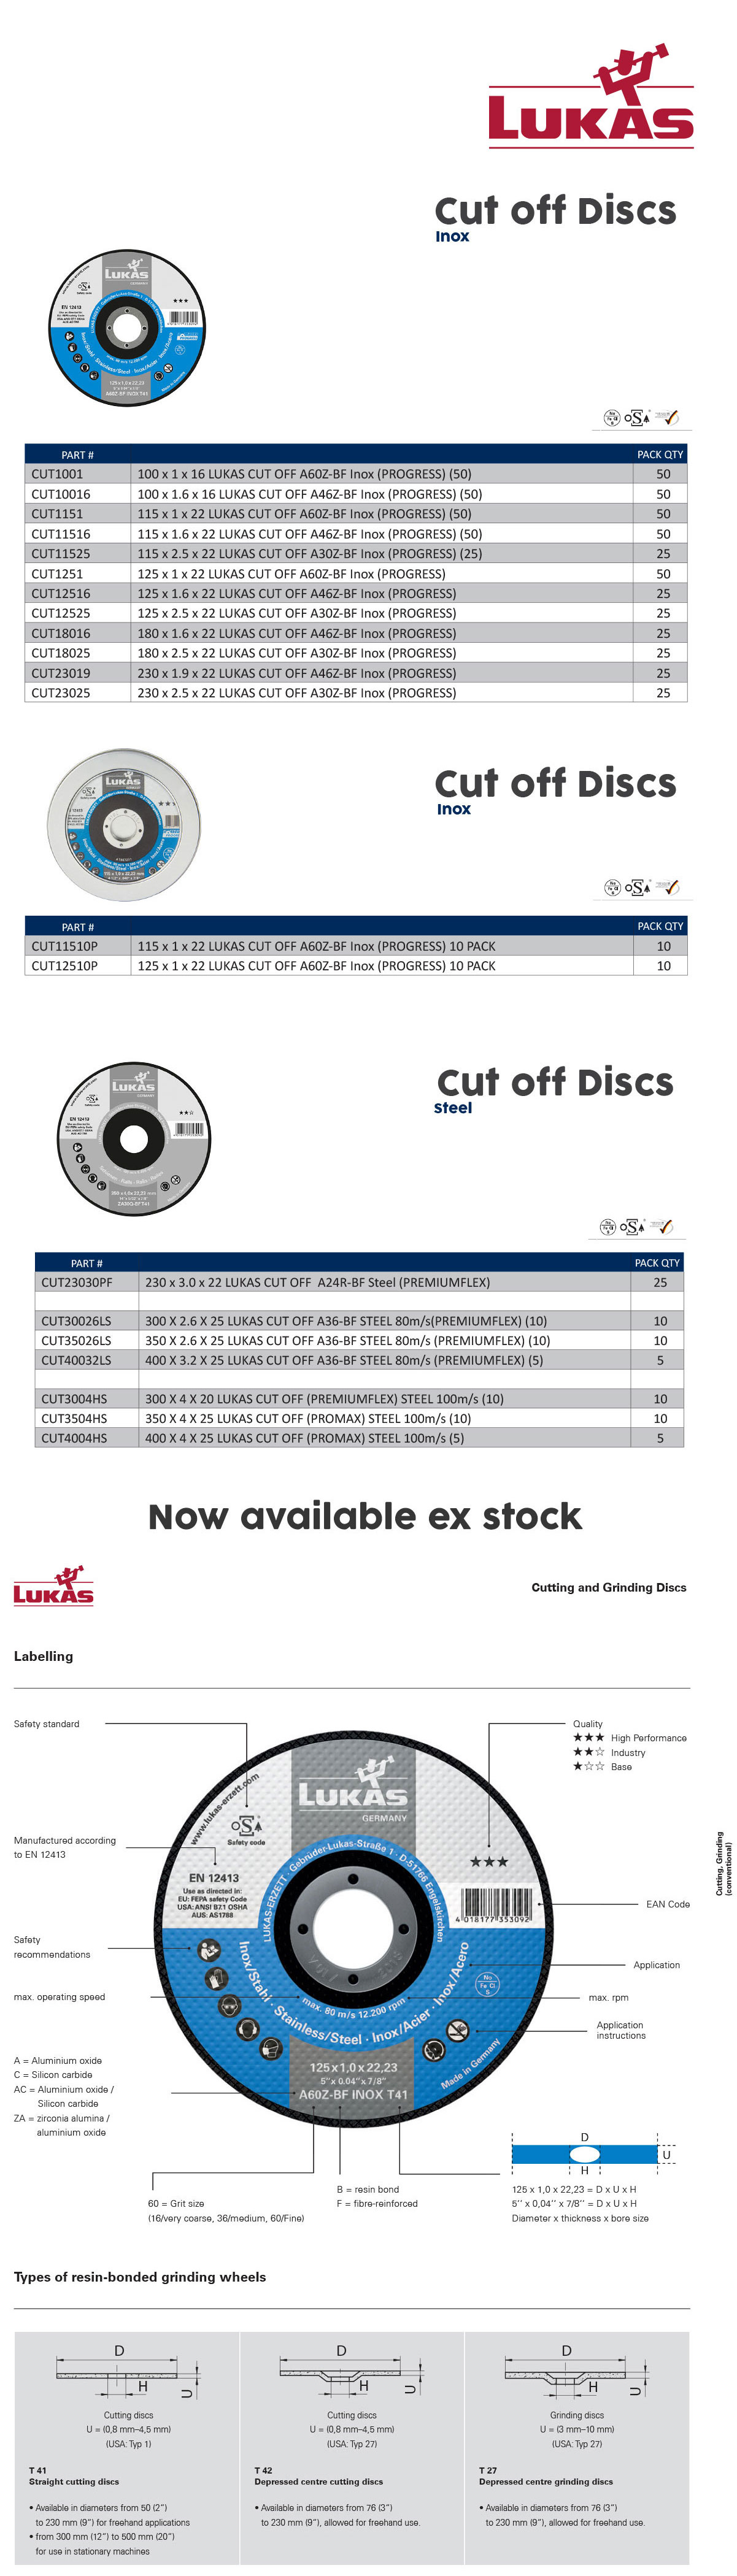 Lukas-cut-off-discs11